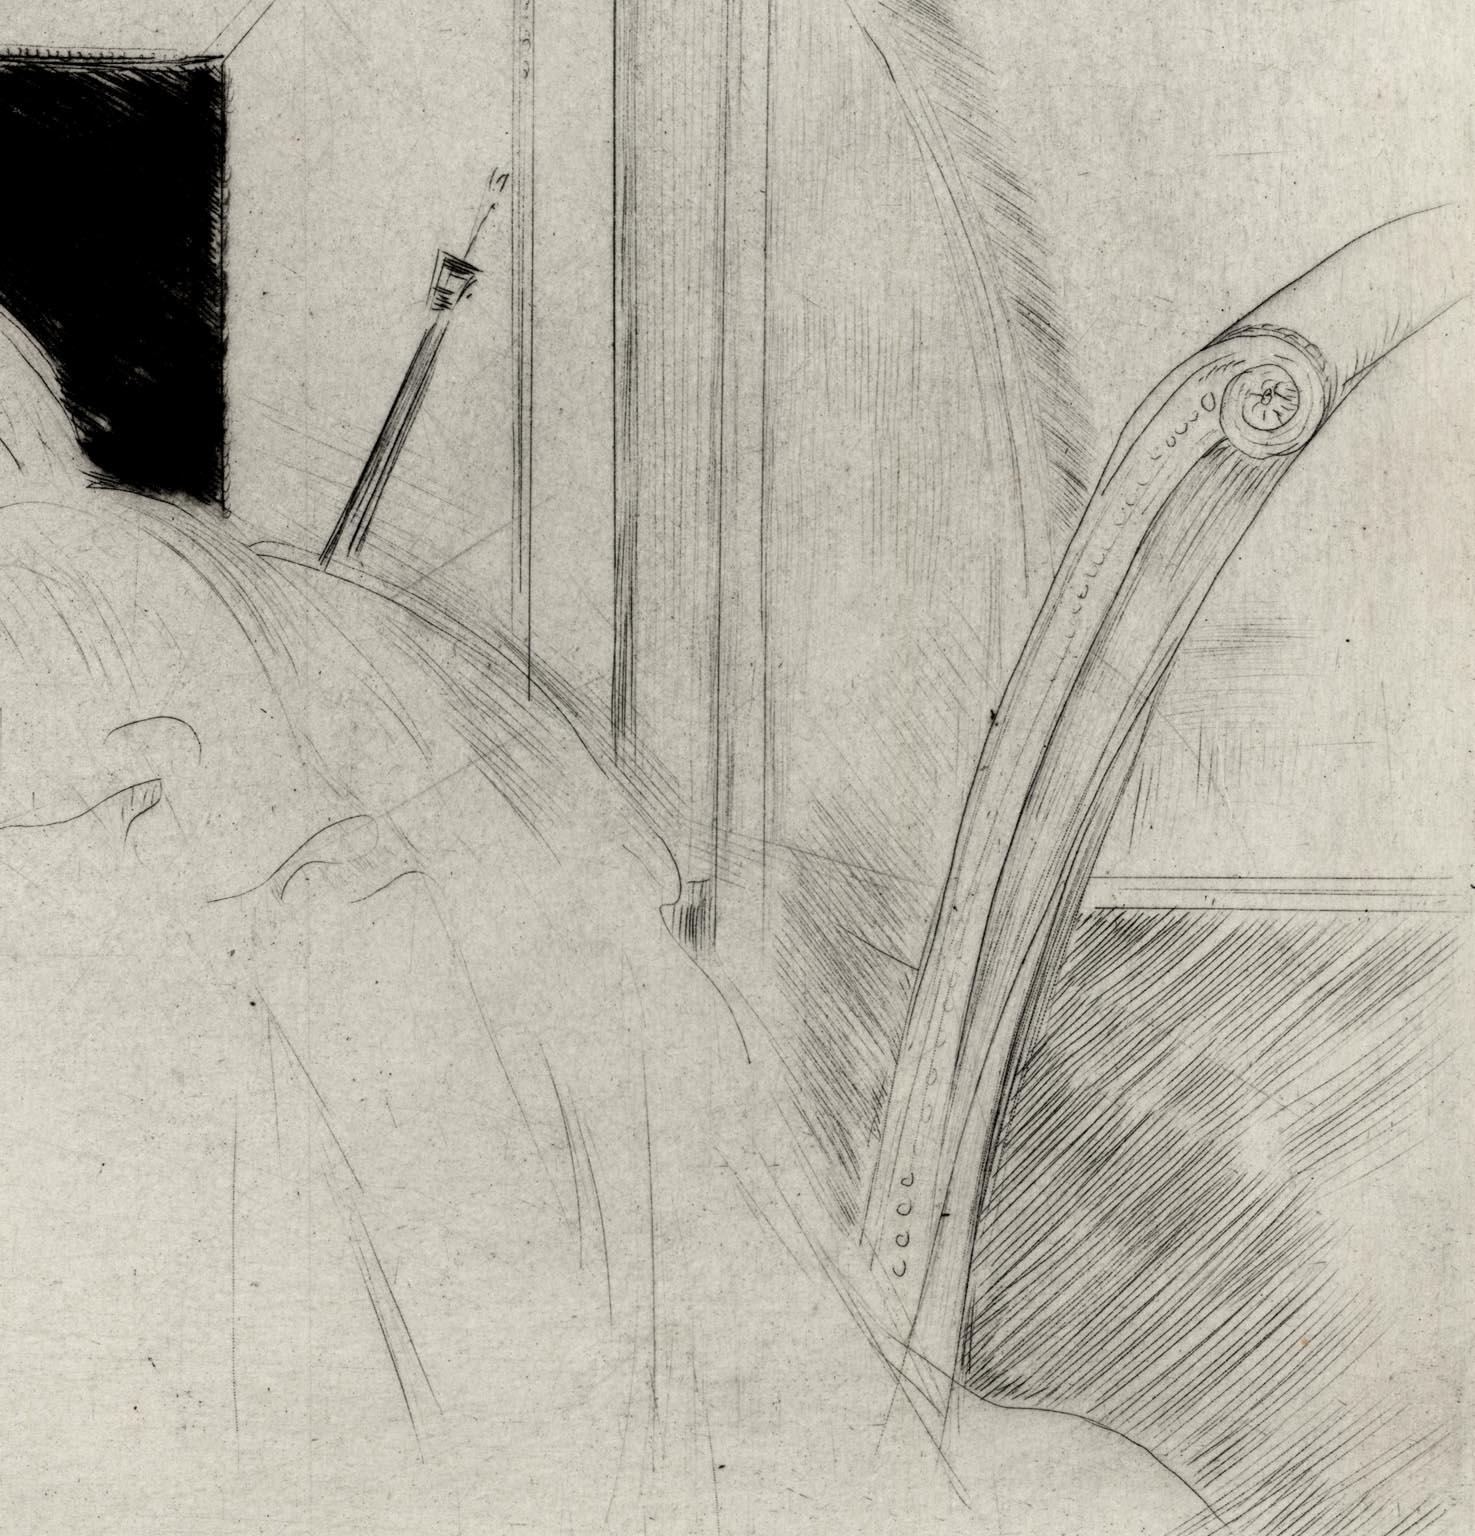 Mme. Helleu by the Fireplace - Post-Impressionist Print by Paul César Helleu